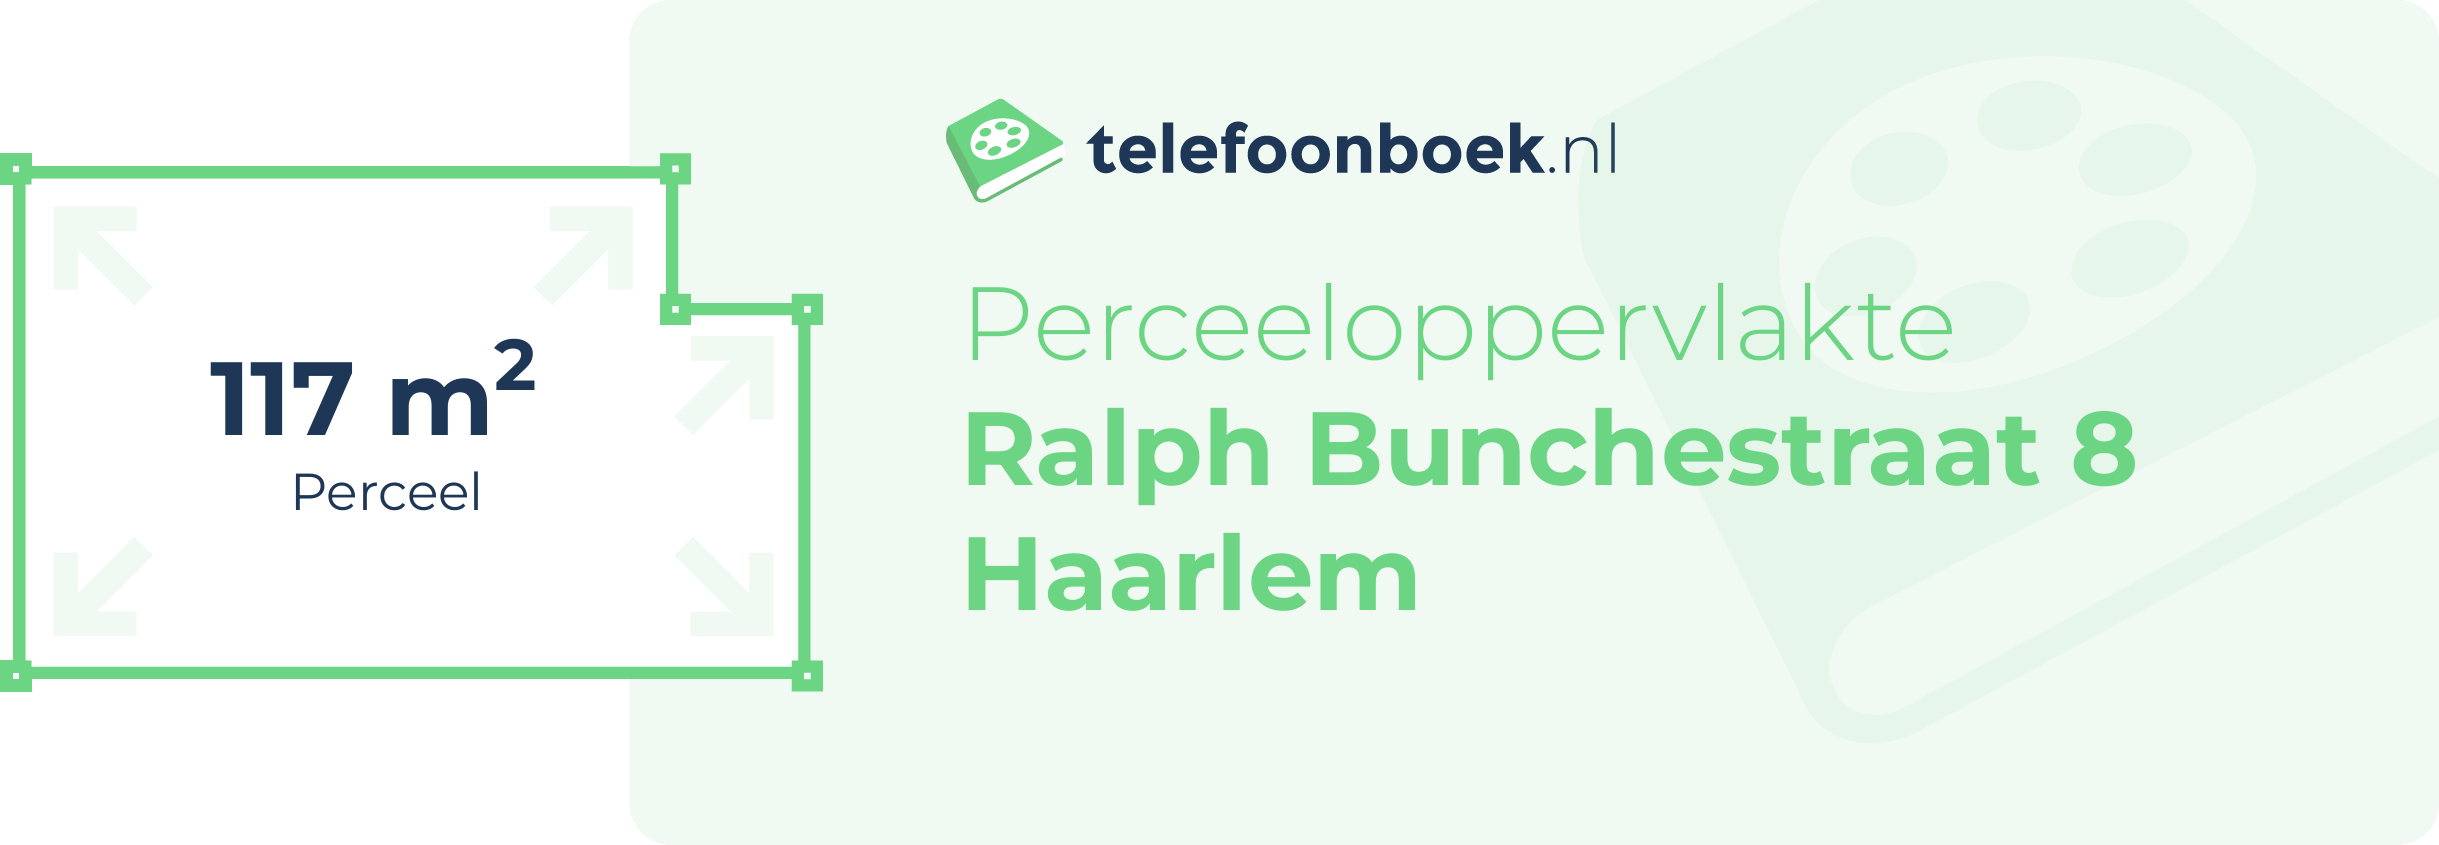 Perceeloppervlakte Ralph Bunchestraat 8 Haarlem